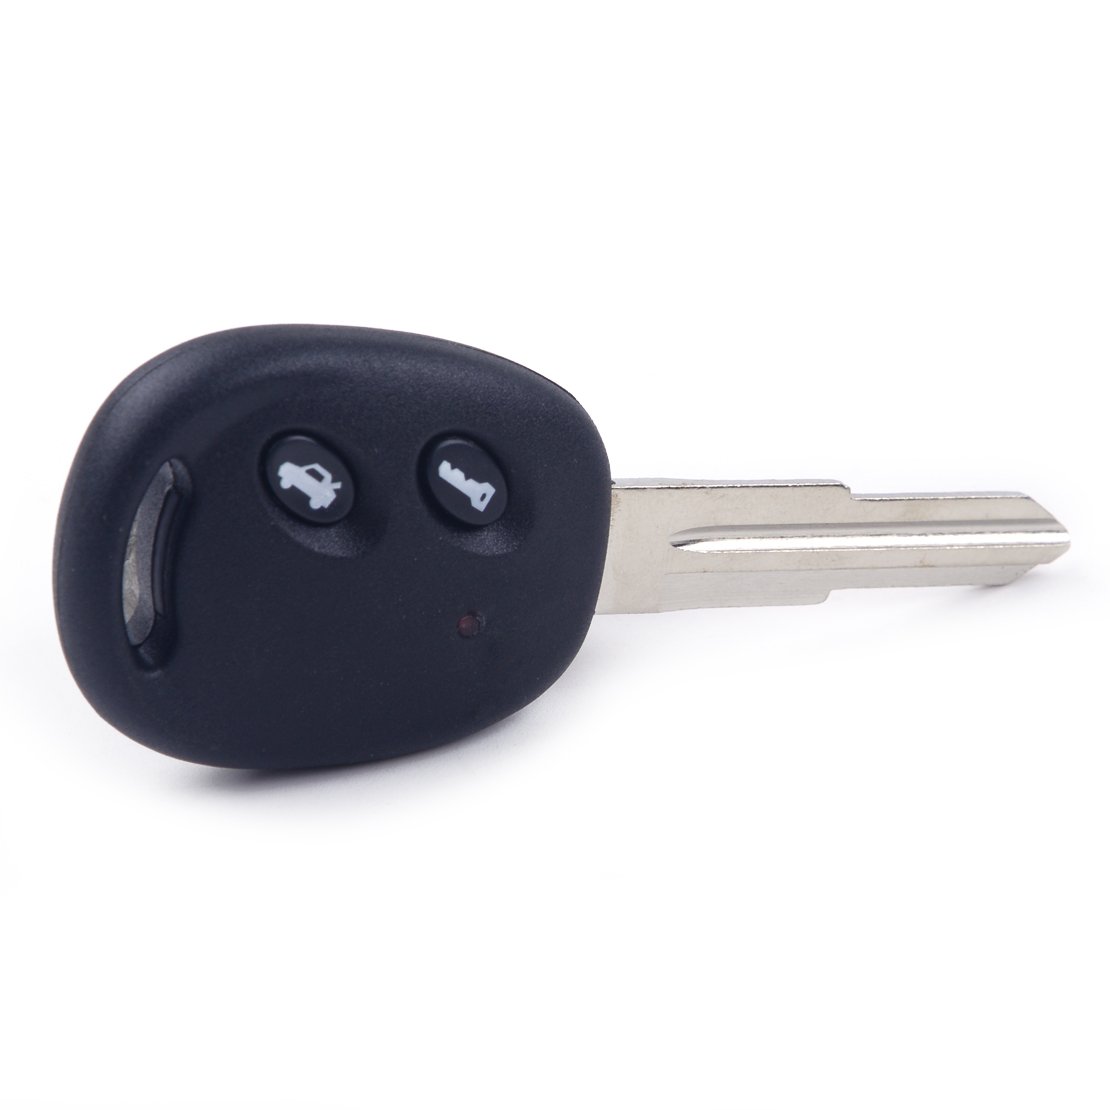 beler 2 Buttons Uncut Blade Blank Remote Schlüsselanhänger Case Shell von beler